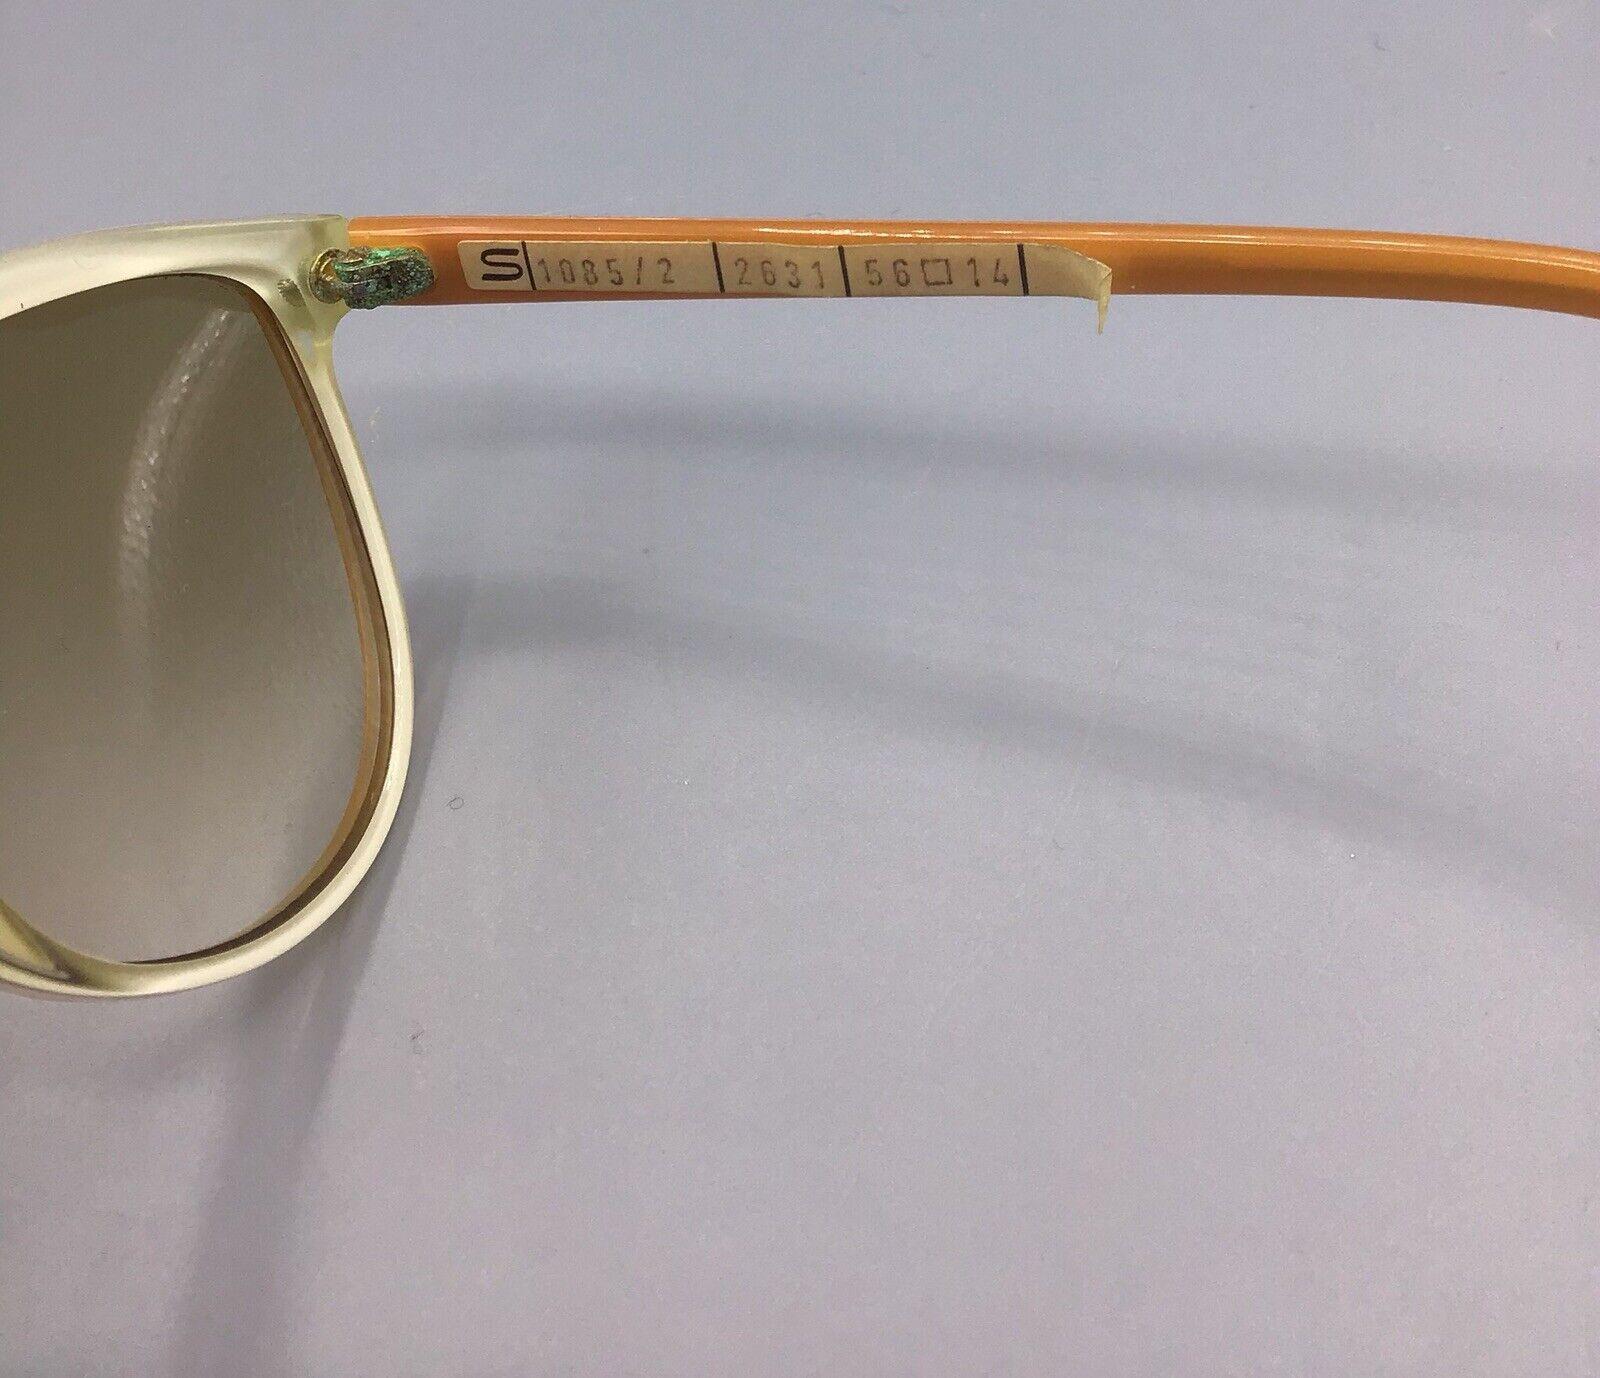 Silhouette 1085/2 2031 occhiale da sole vintage Sunglasses frame sonnenbrillen lunettes